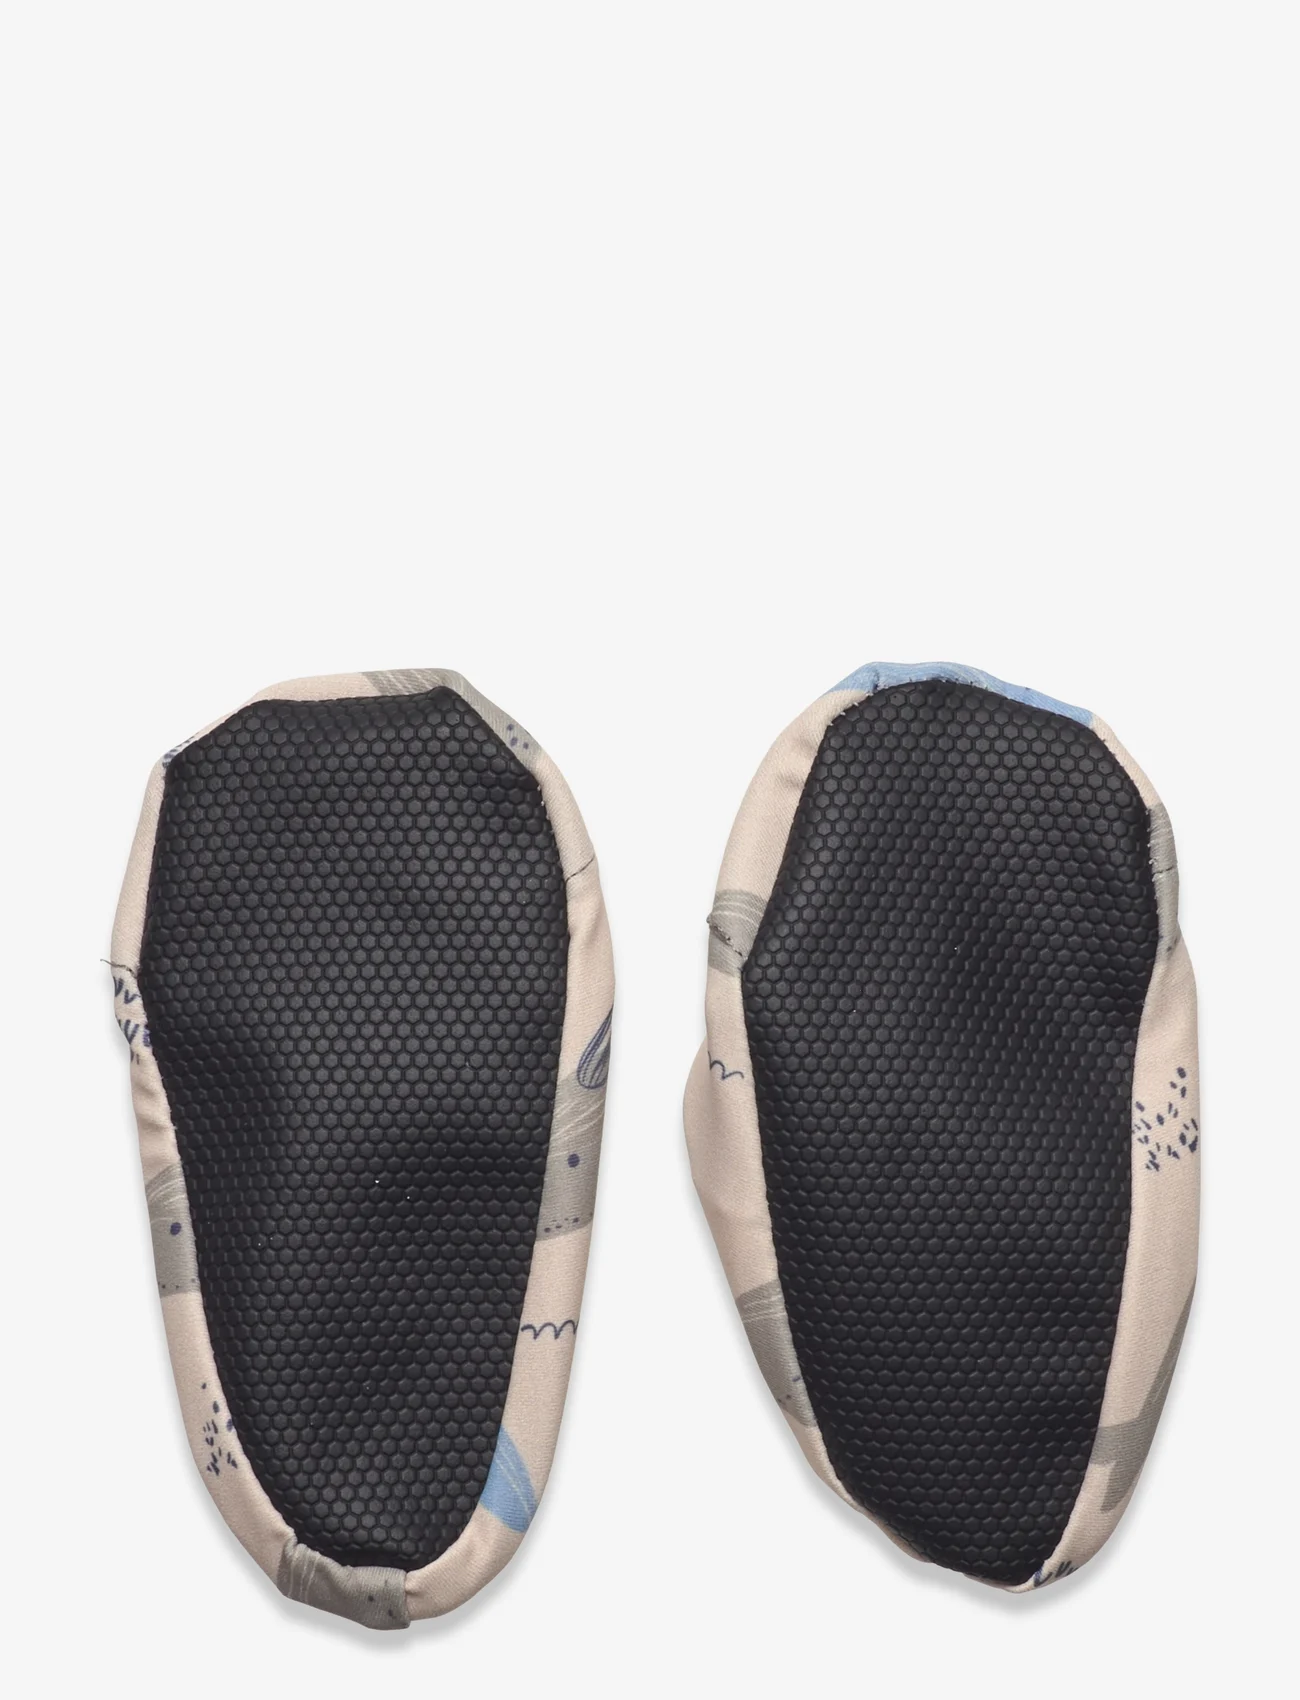 Hust & Claire - HCFabian - Swim shoes - vandsko - french oak - 1